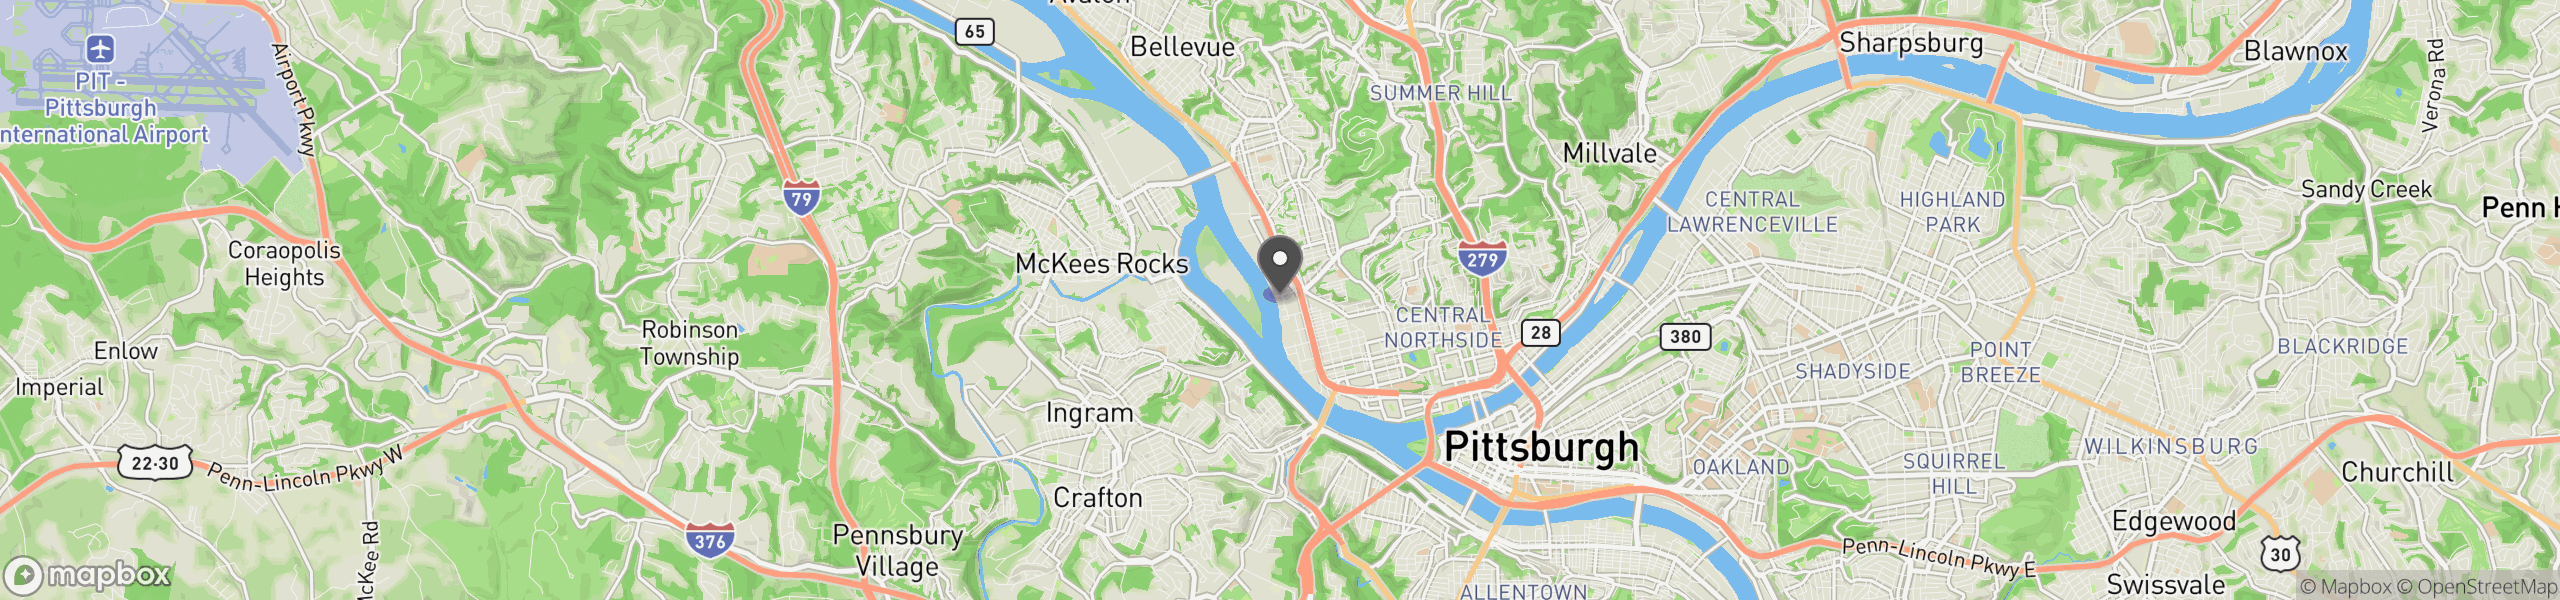 Pittsburgh, PA 15233